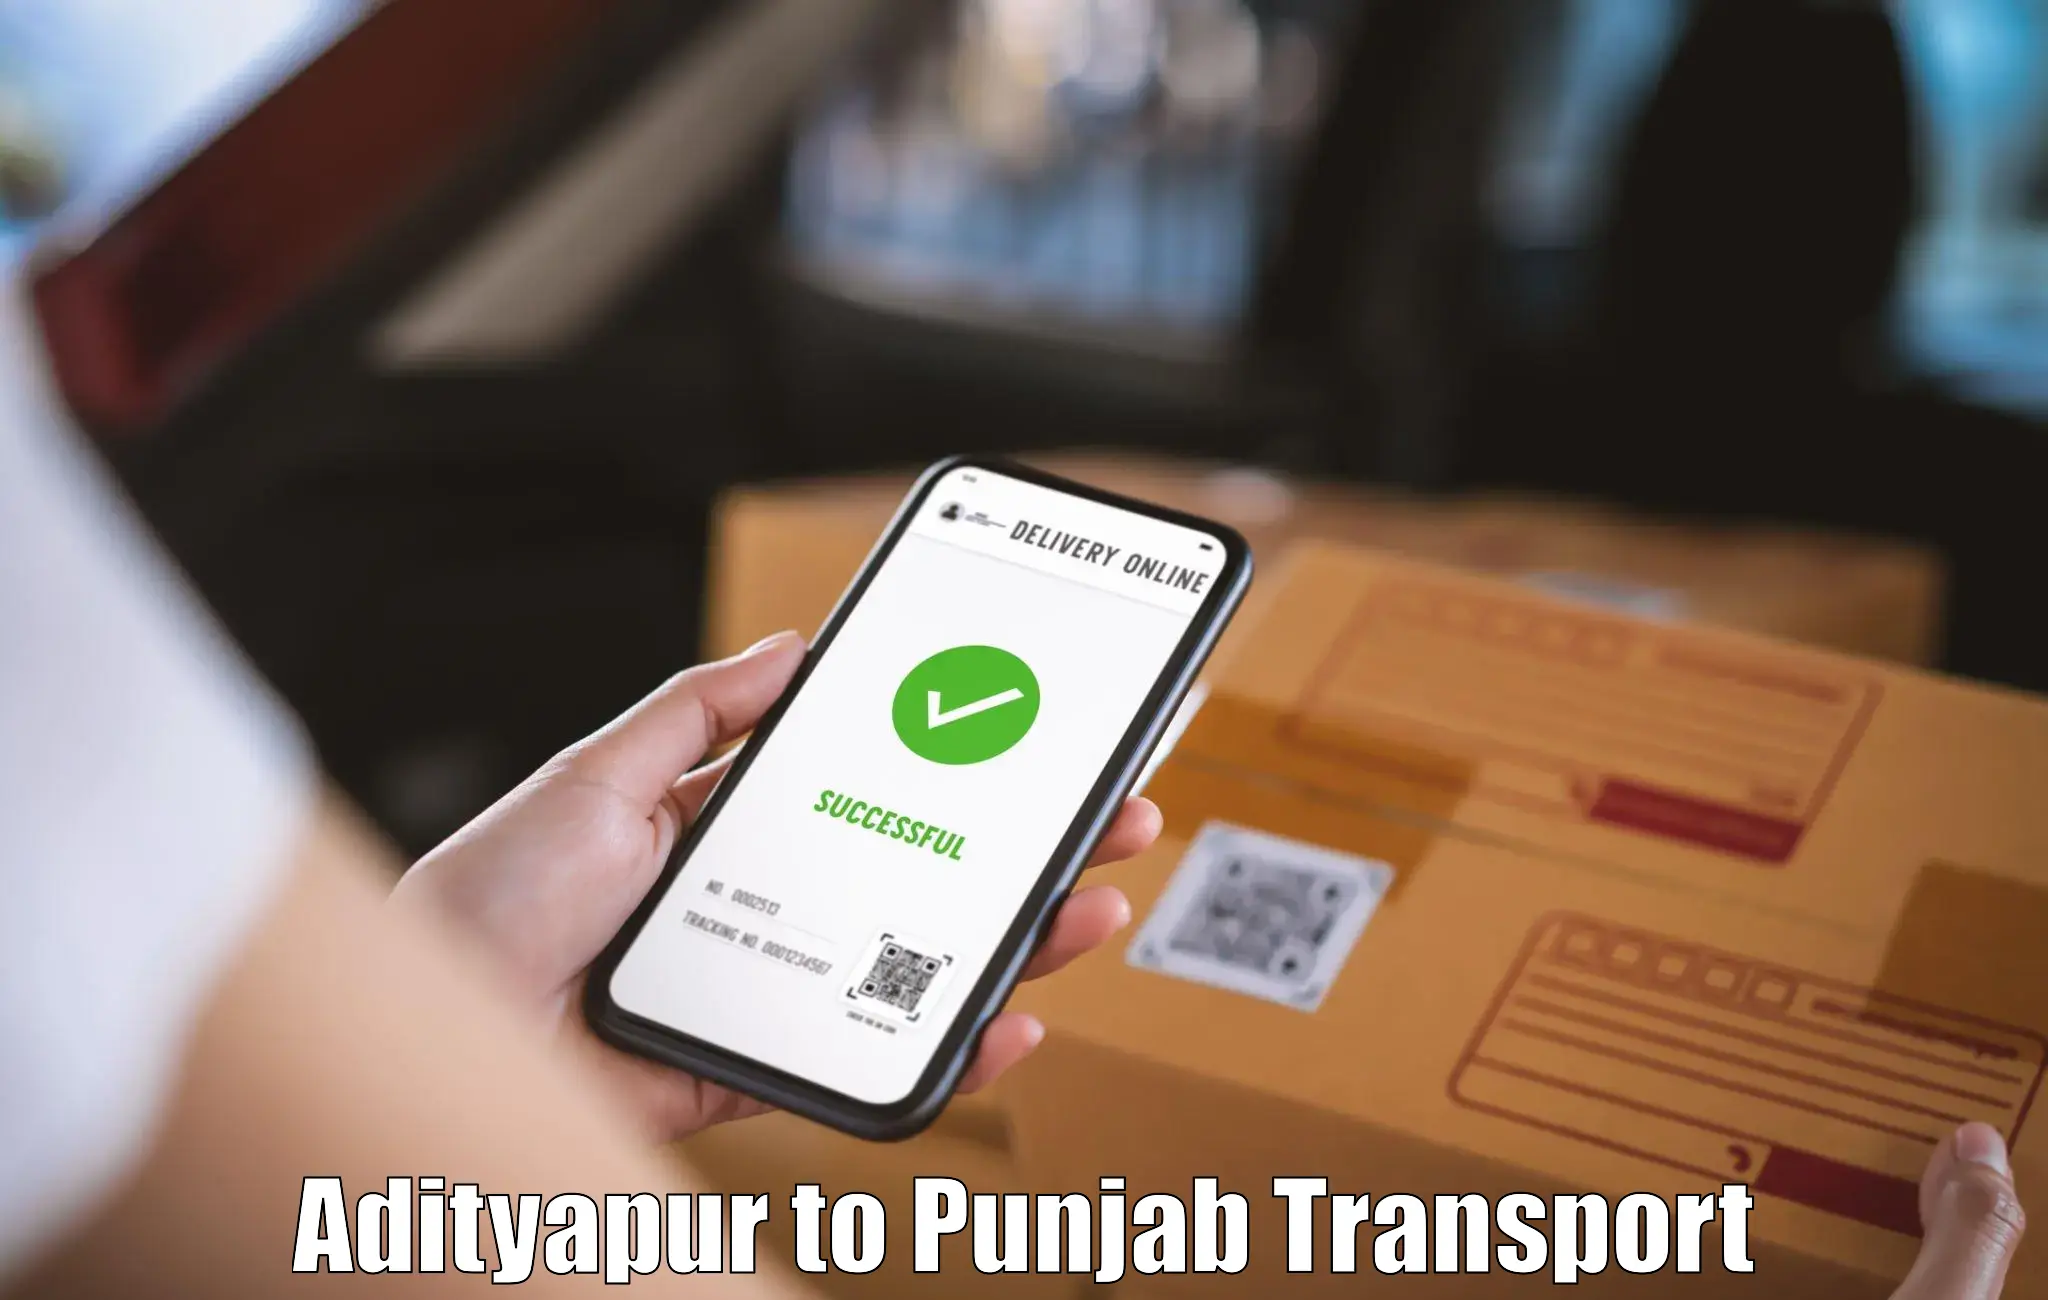 Delivery service Adityapur to Kotkapura